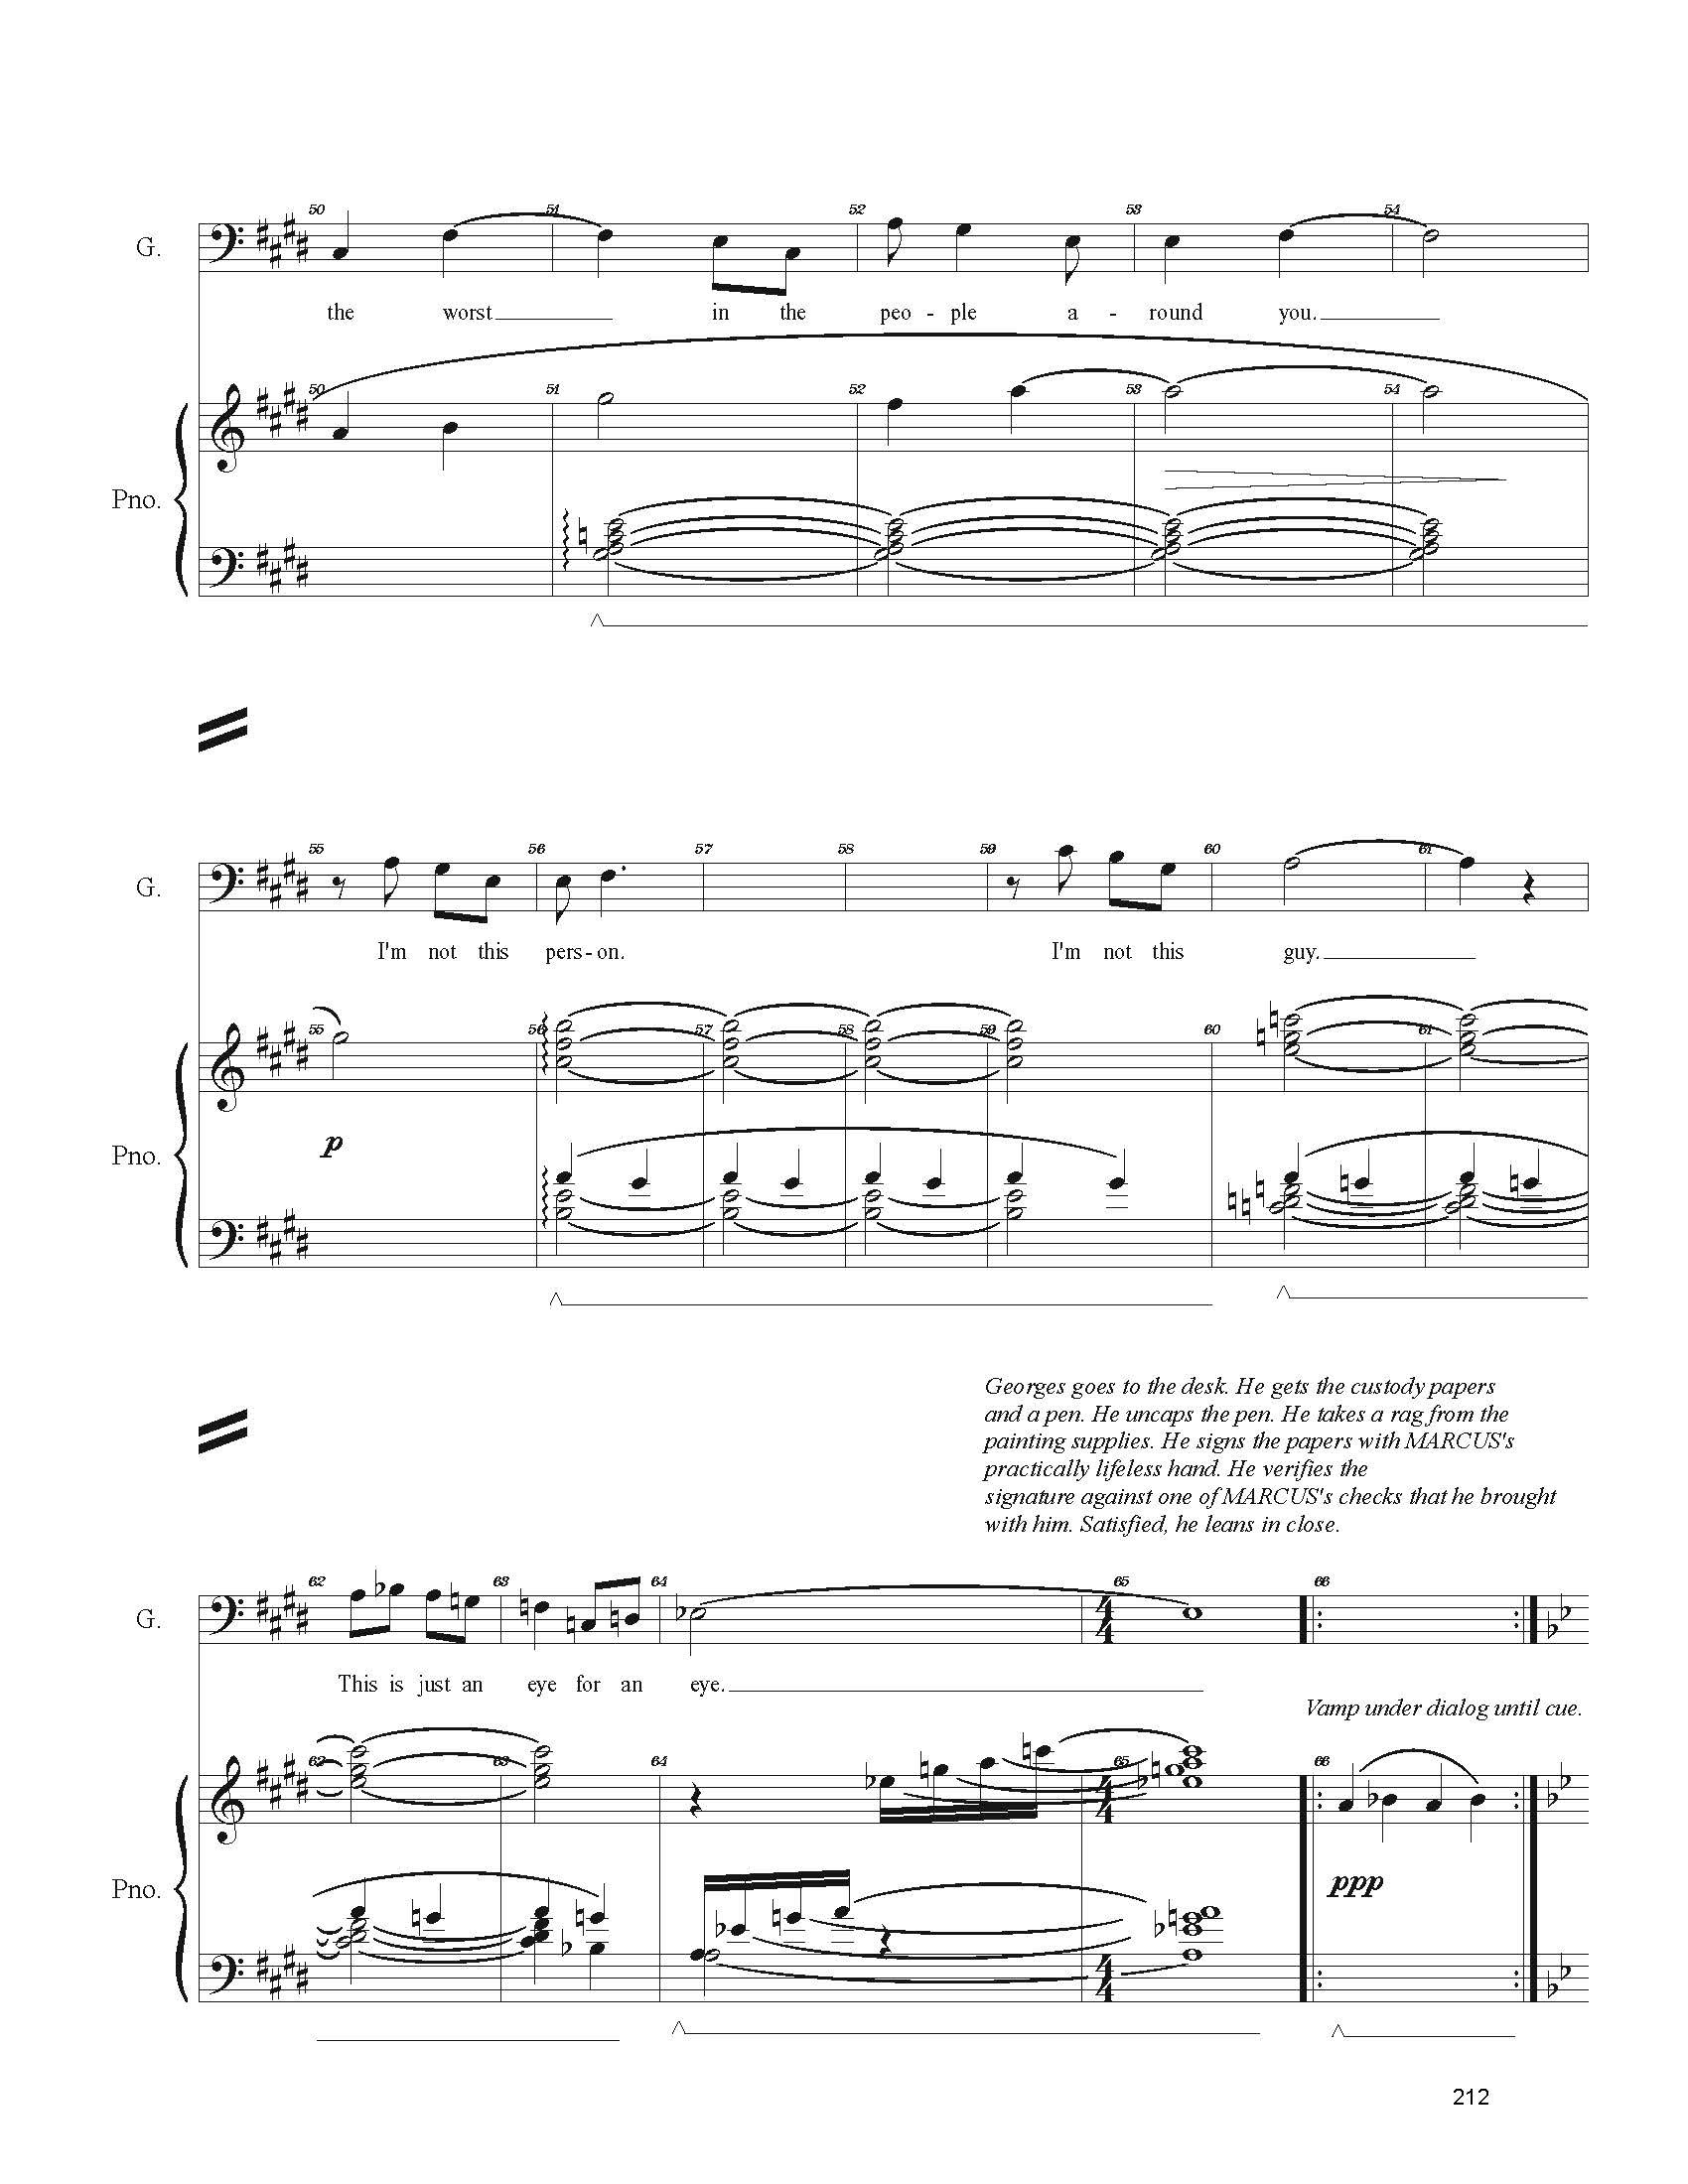 FULL PIANO VOCAL SCORE DRAFT 1 - Score_Page_212.jpg